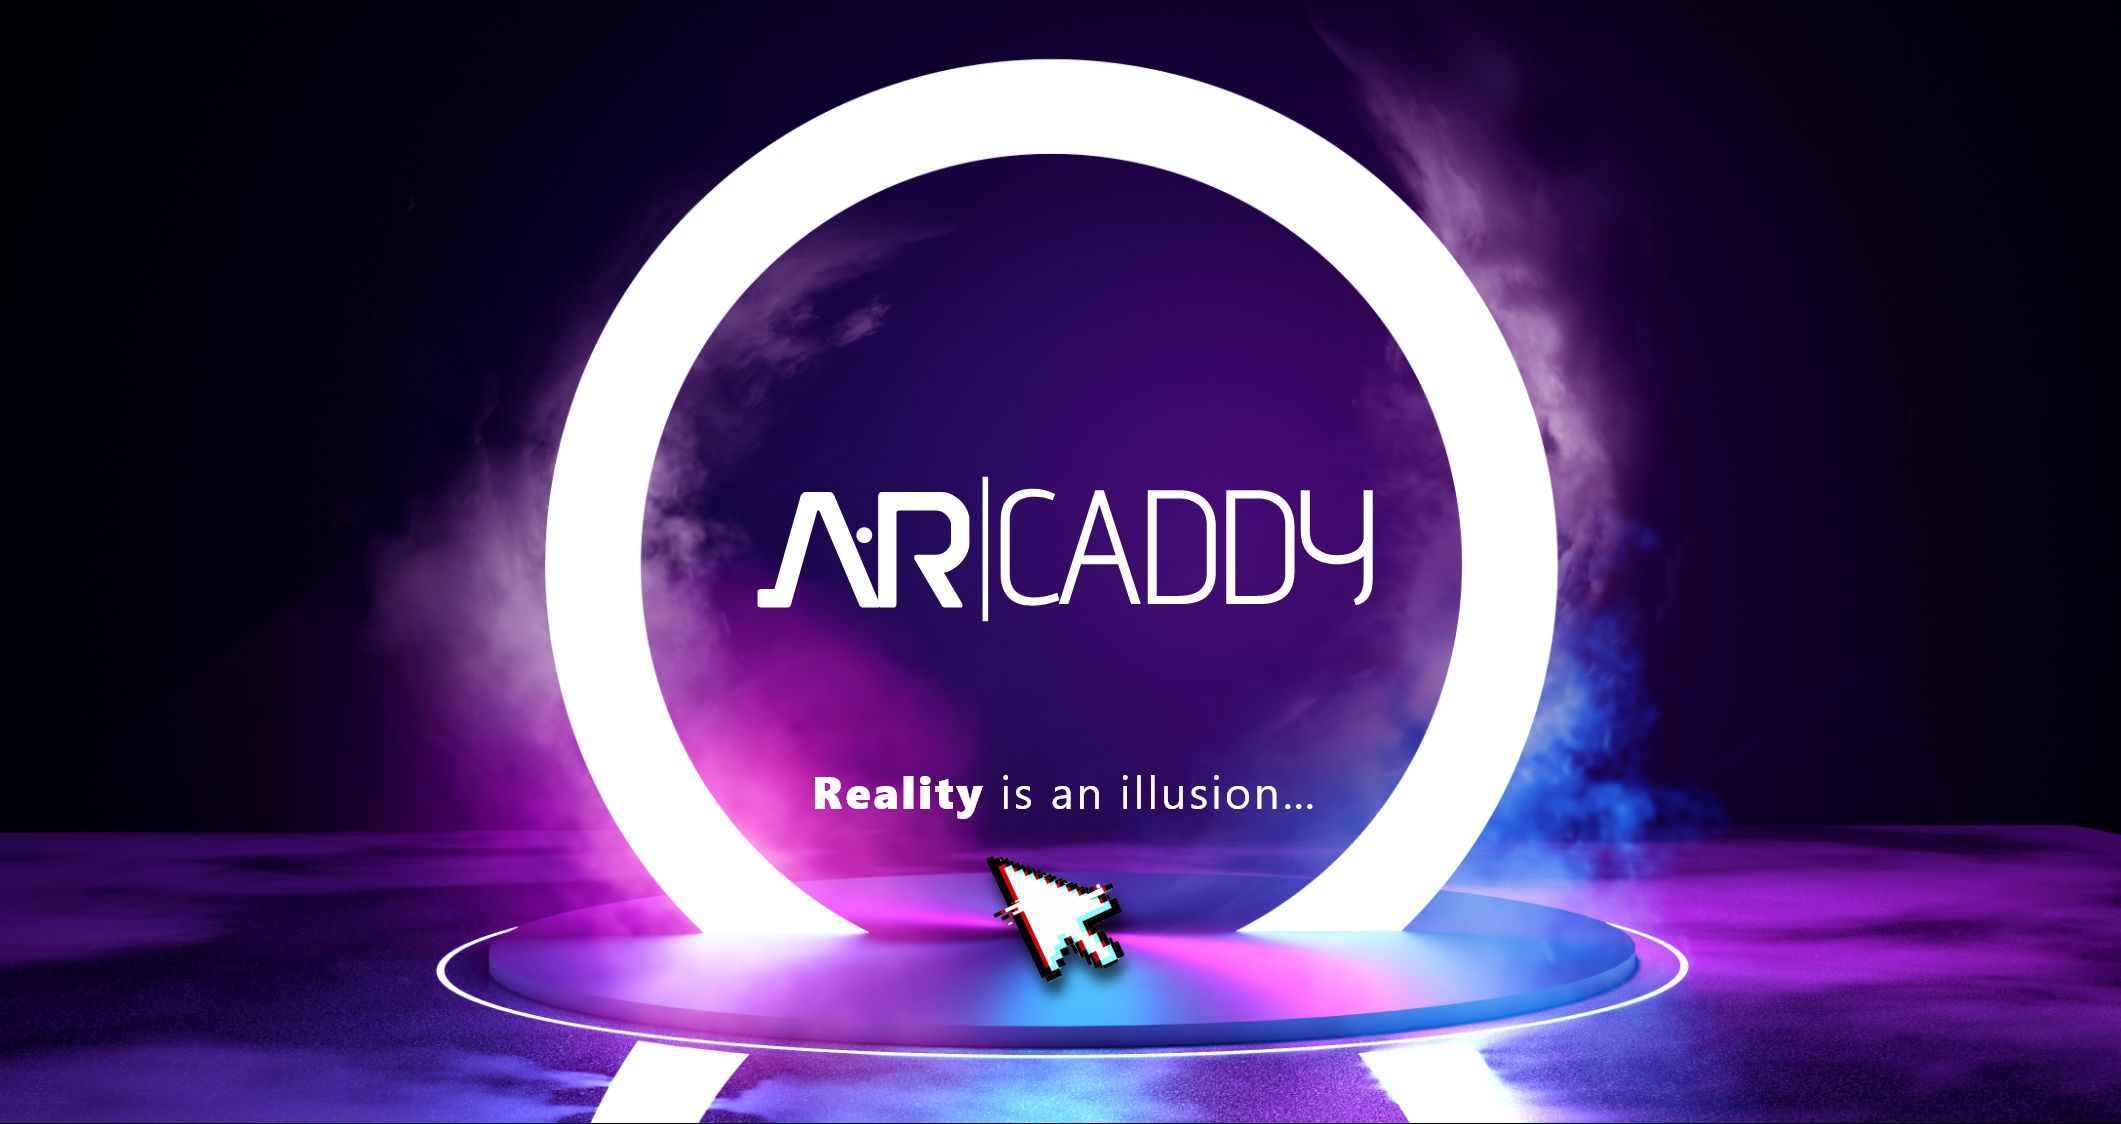 AR|CADDY - Reality is an illusion